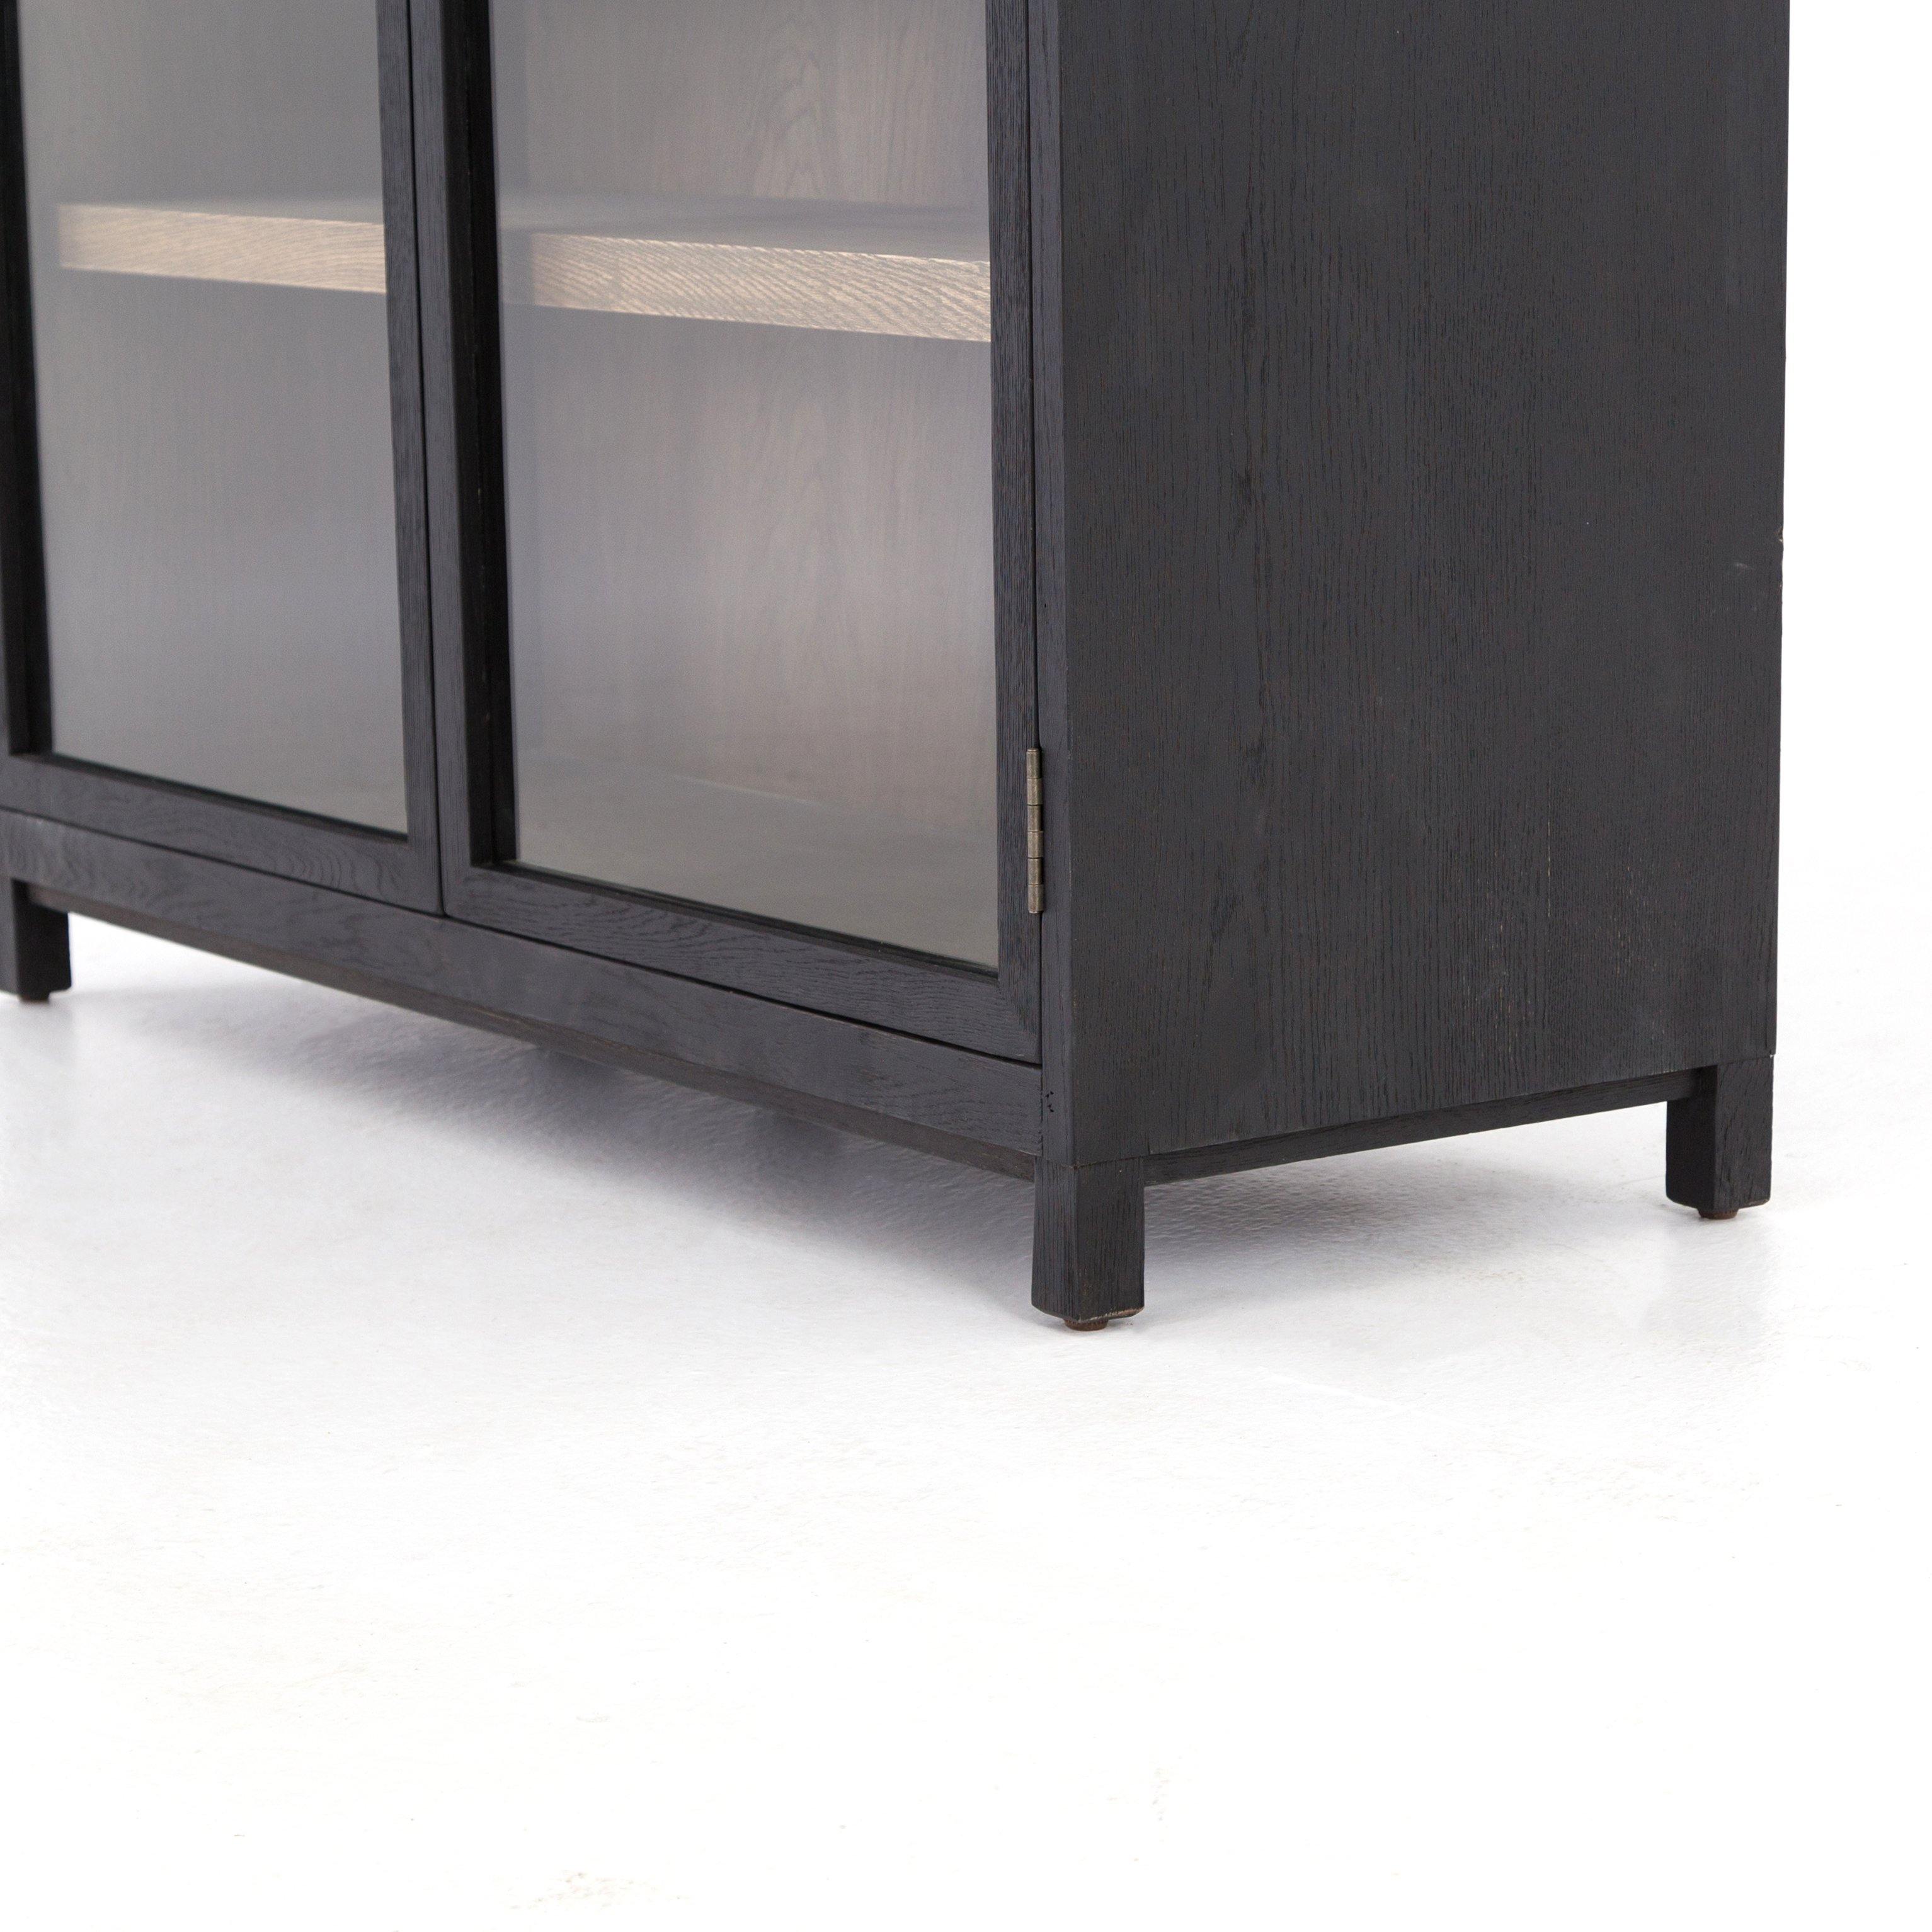 Millie Cabinet - Reimagine Designs - Bookcases